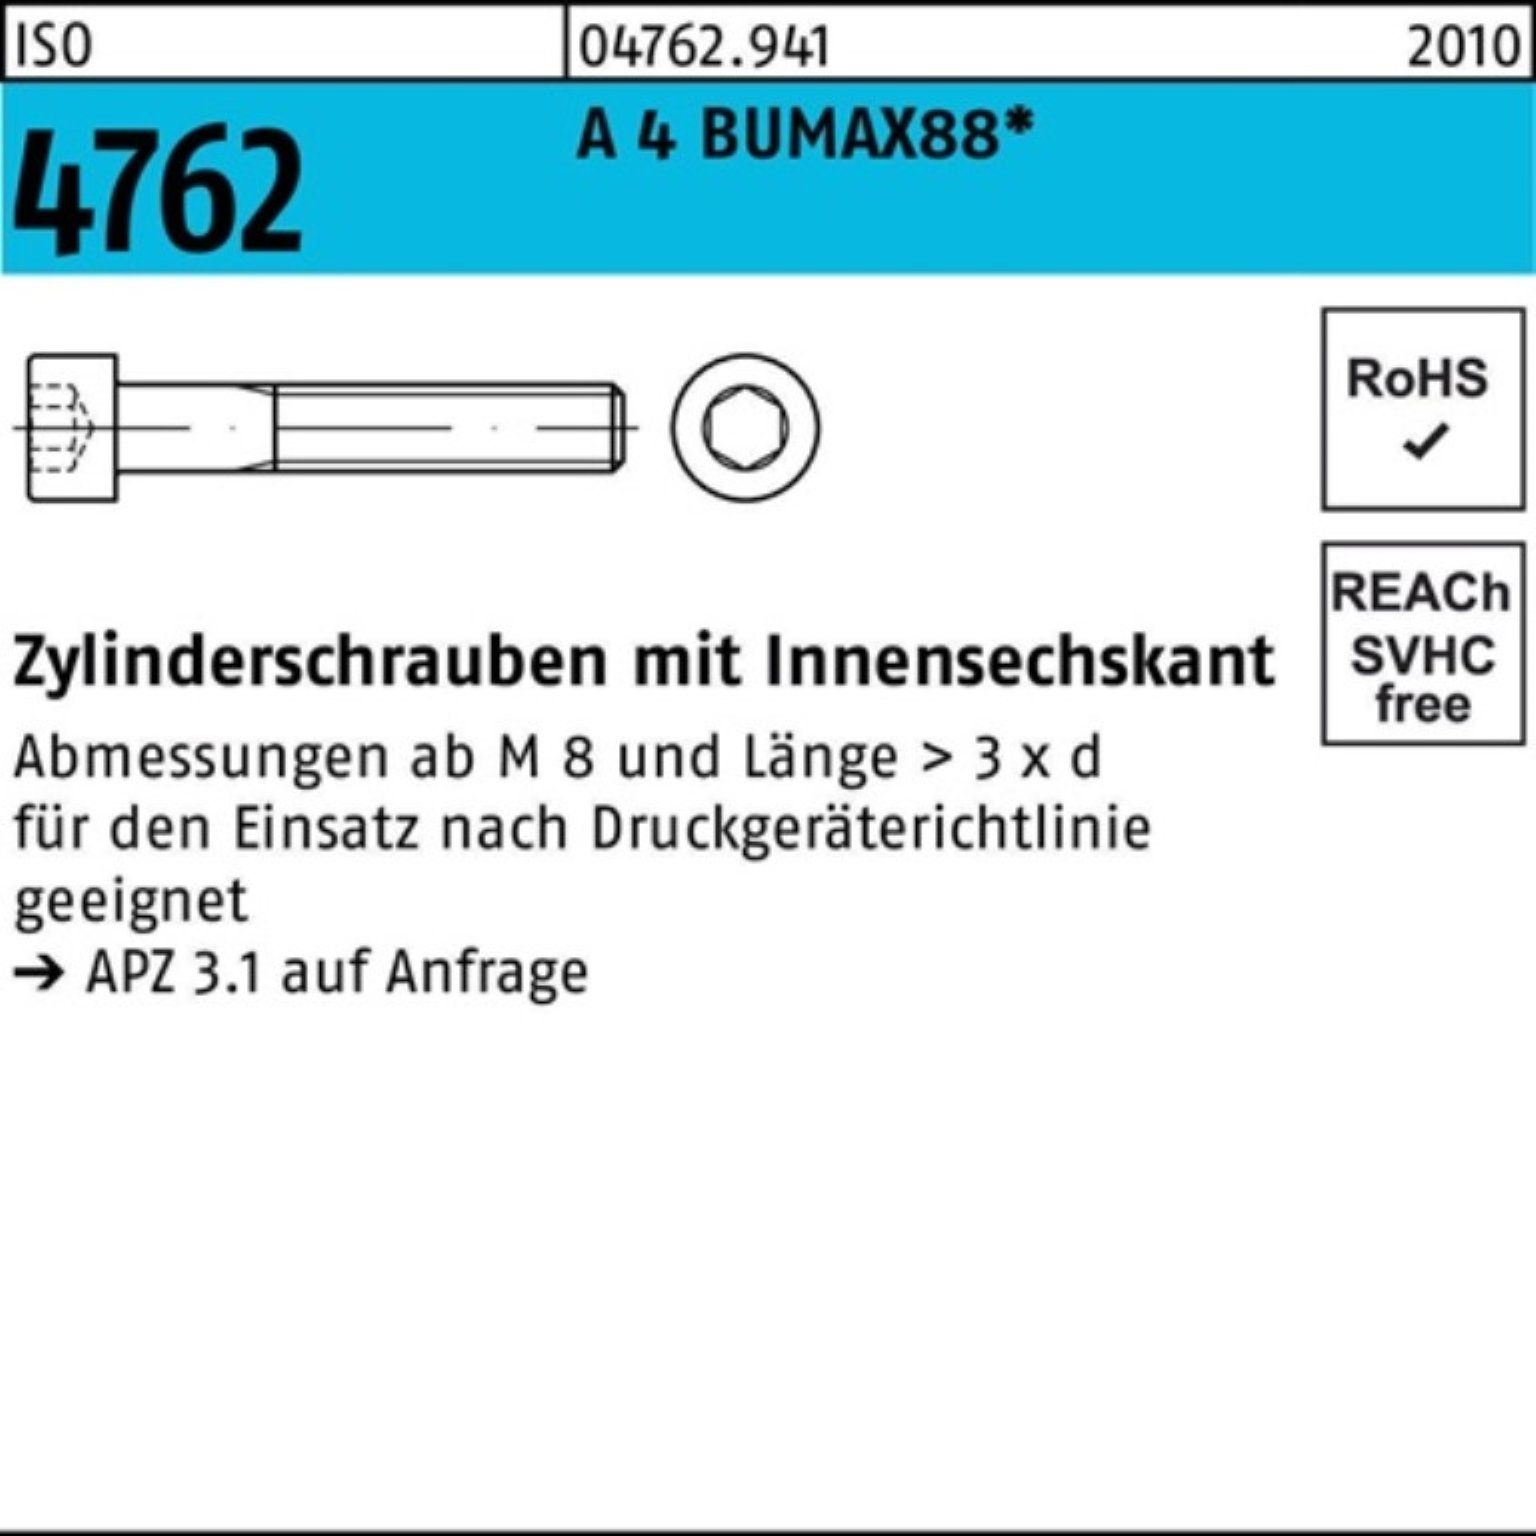 Bufab Zylinderschraube 100er Pack M6x ISO Innen-6kt 100 4 40 BUMAX88 Zylinderschraube A 4762